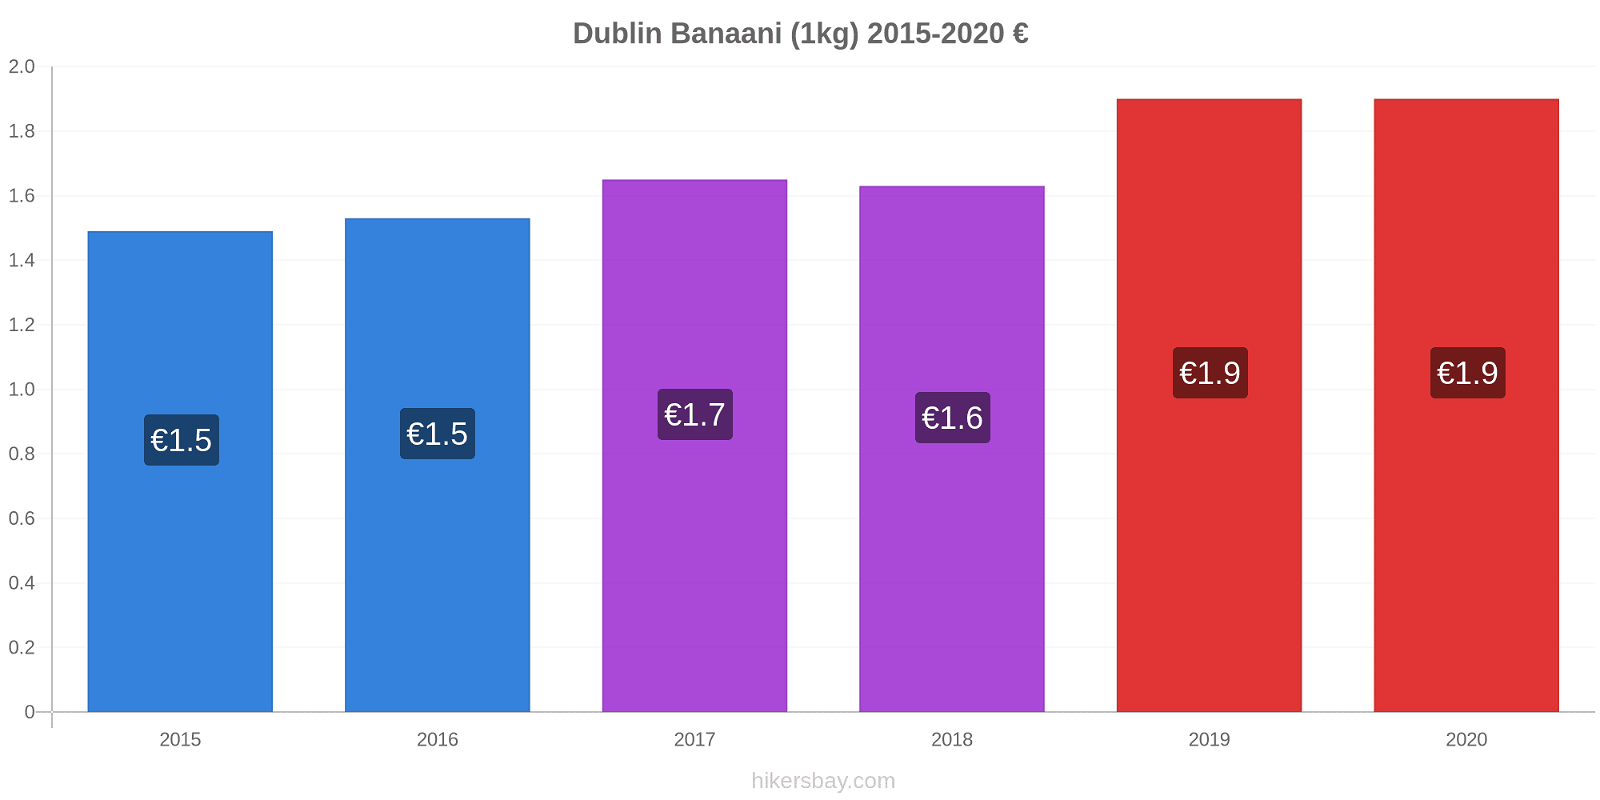 Dublin hintojen muutokset Banaani (1kg) hikersbay.com